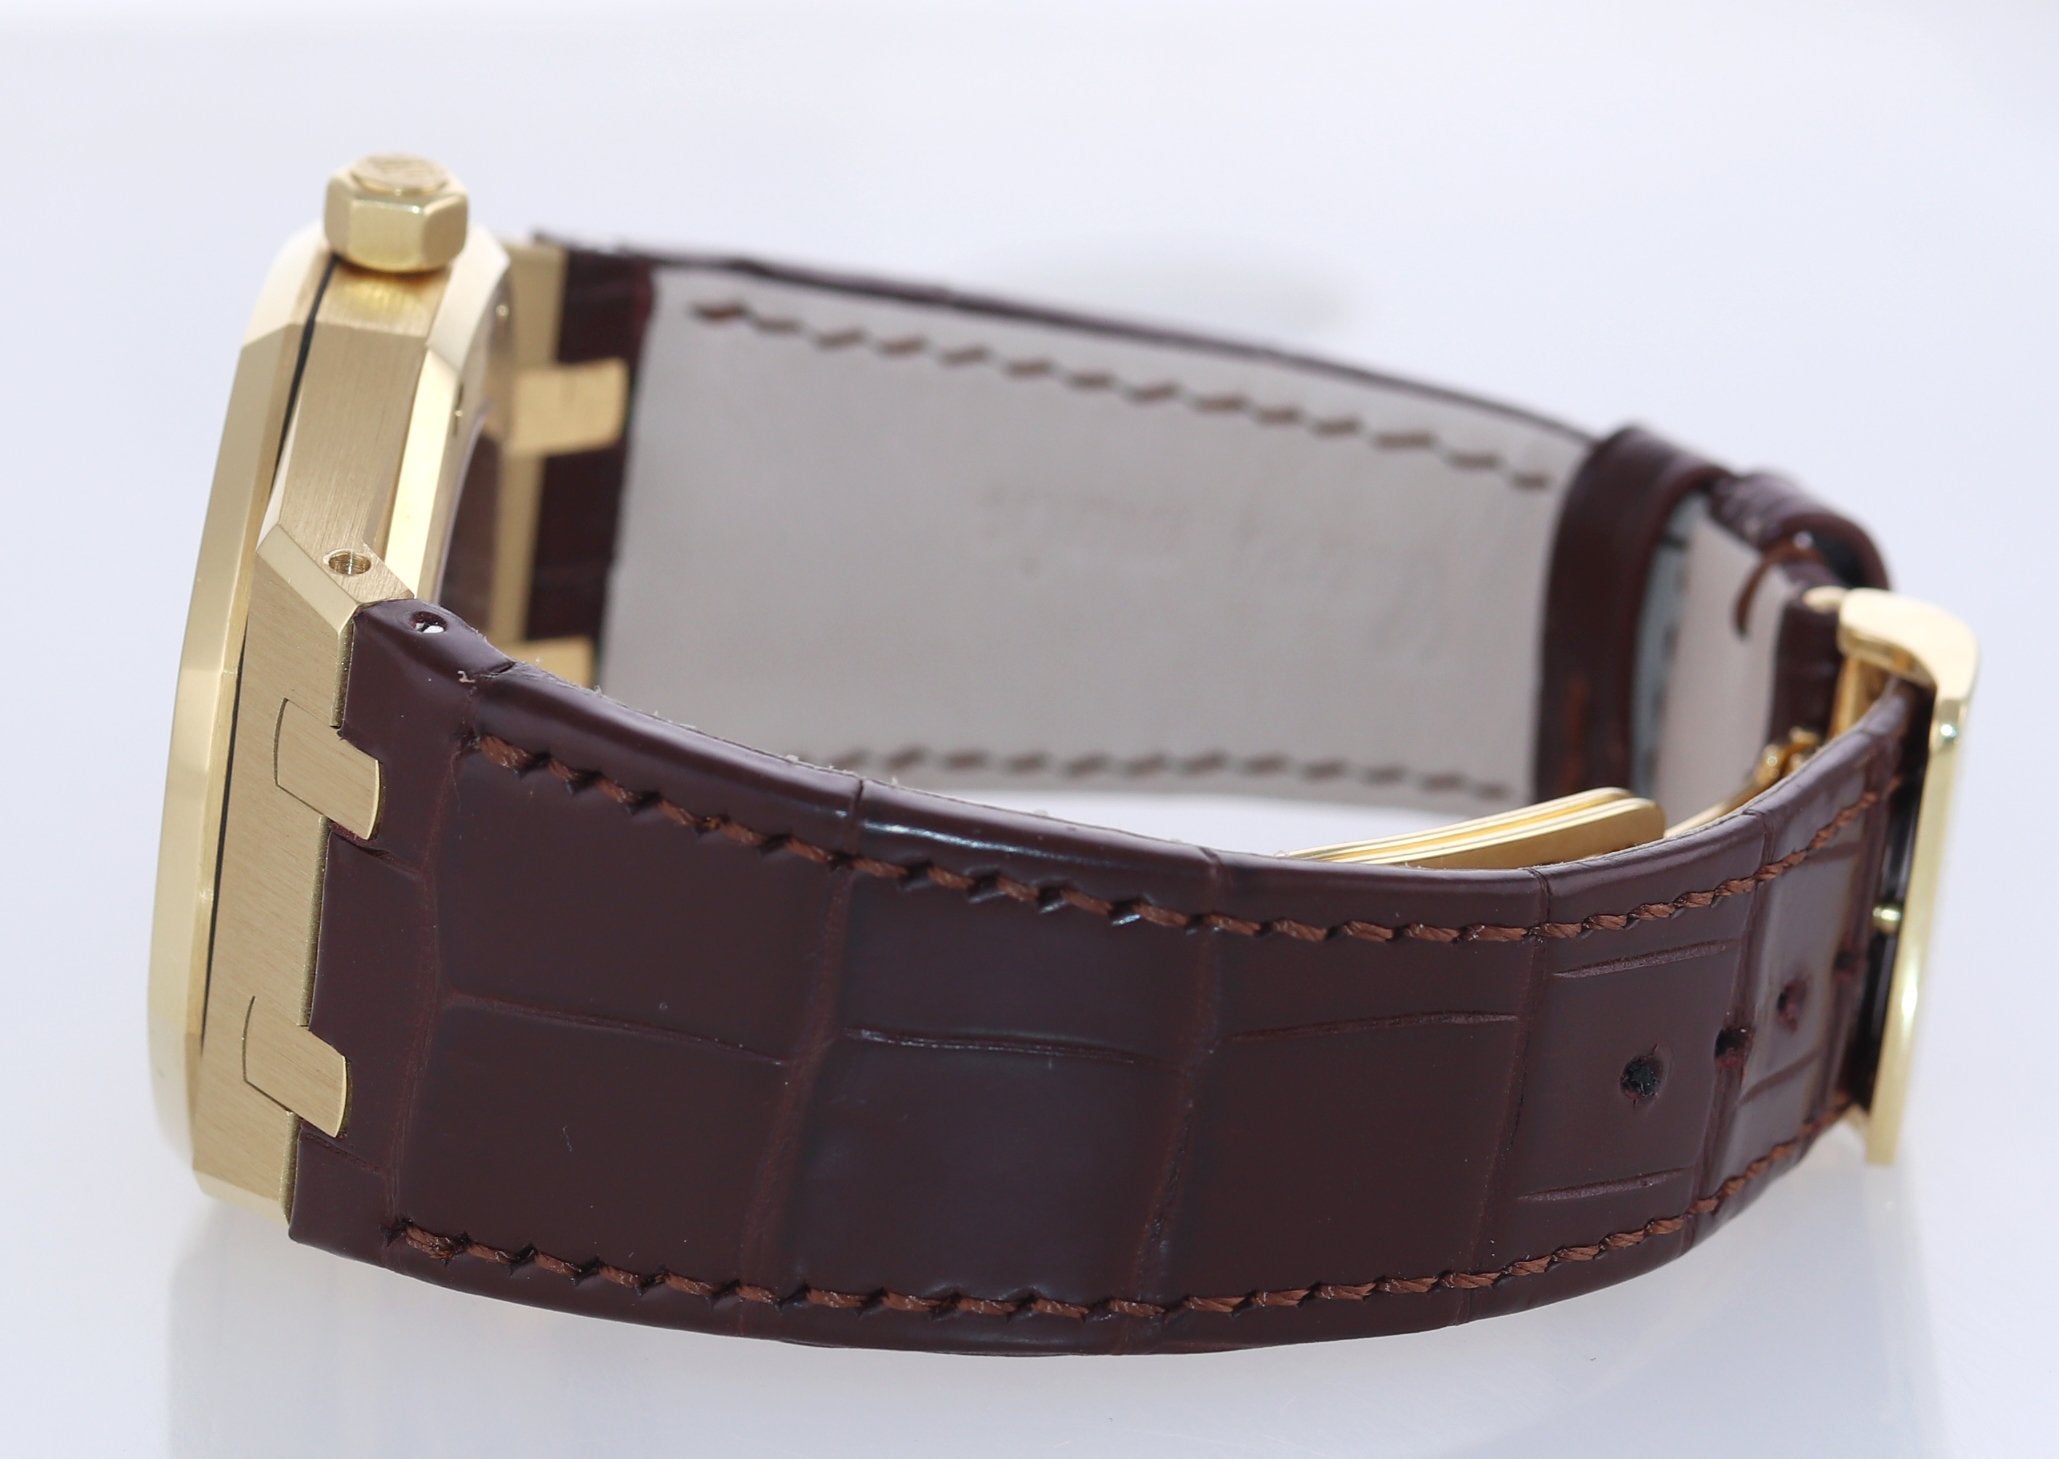 Audemars Piguet AP Royal Oak 18K Rose Gold 15300 39mm White Leather Watch